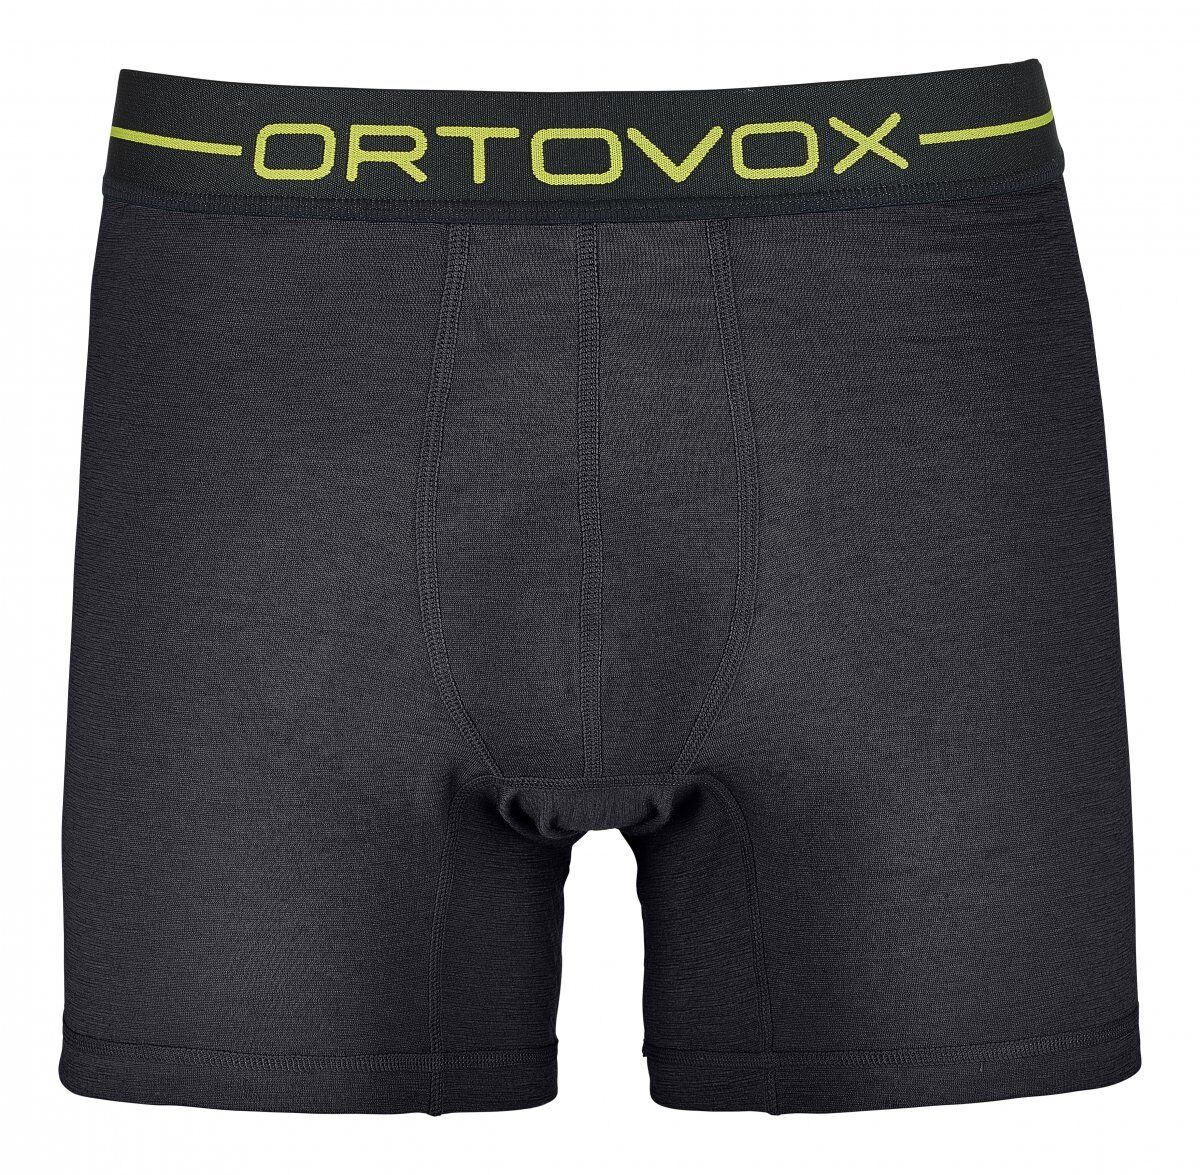 Ortovox - 145 Ultra Boxer - Uomo